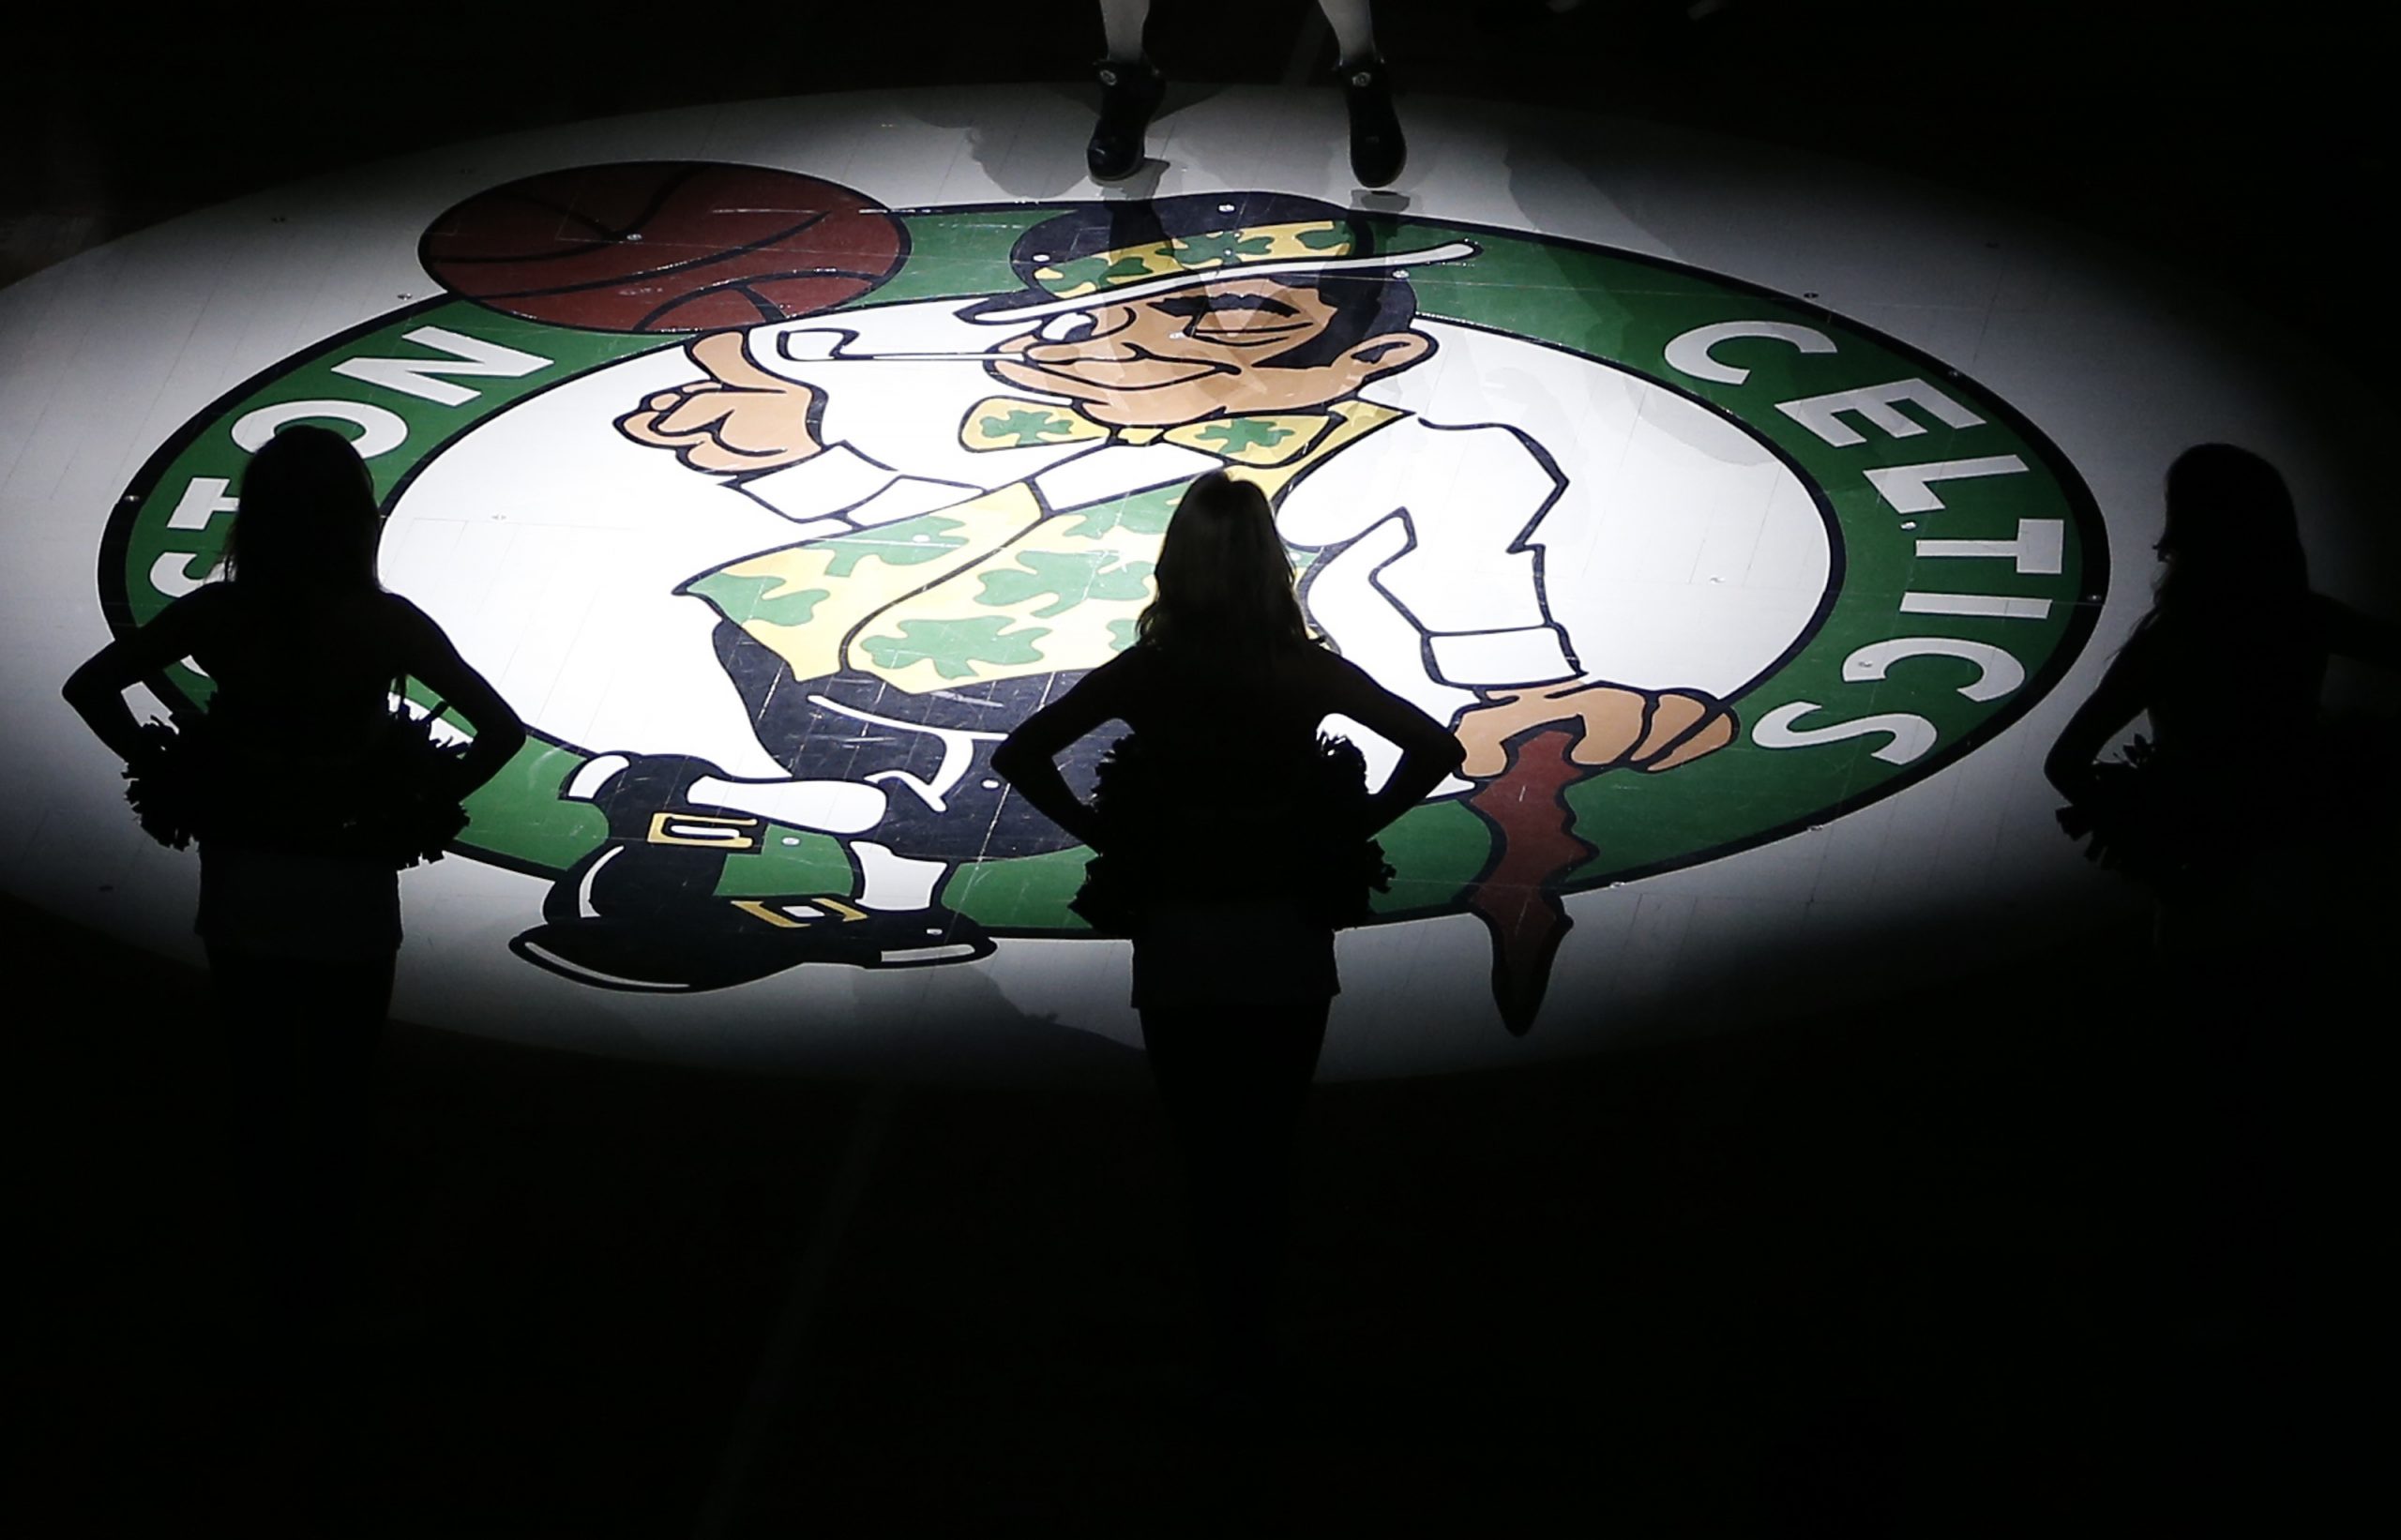 Boston Celtics dancers are silhouetted against the Celtics logo.